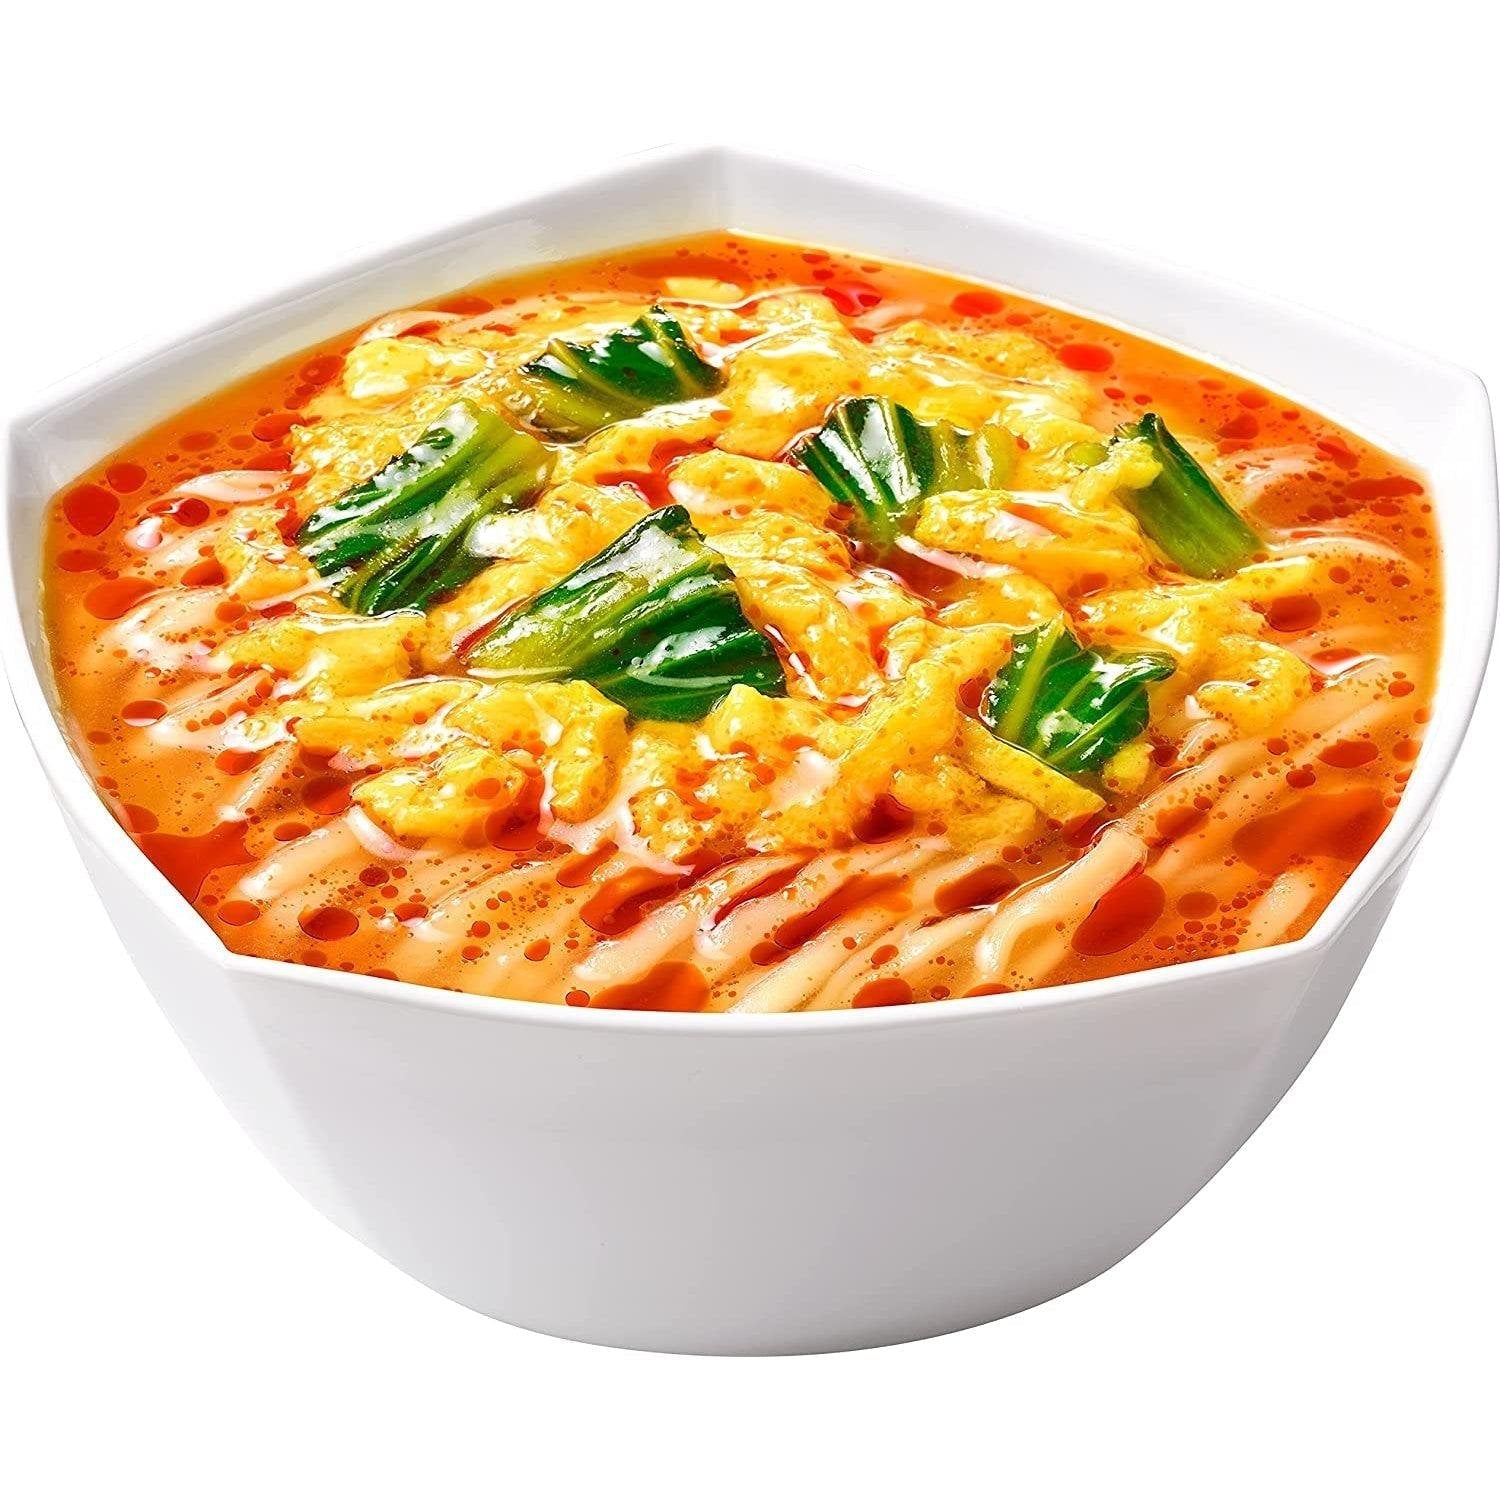 Myojo Ippeichan Chukazanmai Hot and Sour Soup Ramen Instant Noodles Cup 64g (Pack of 6)